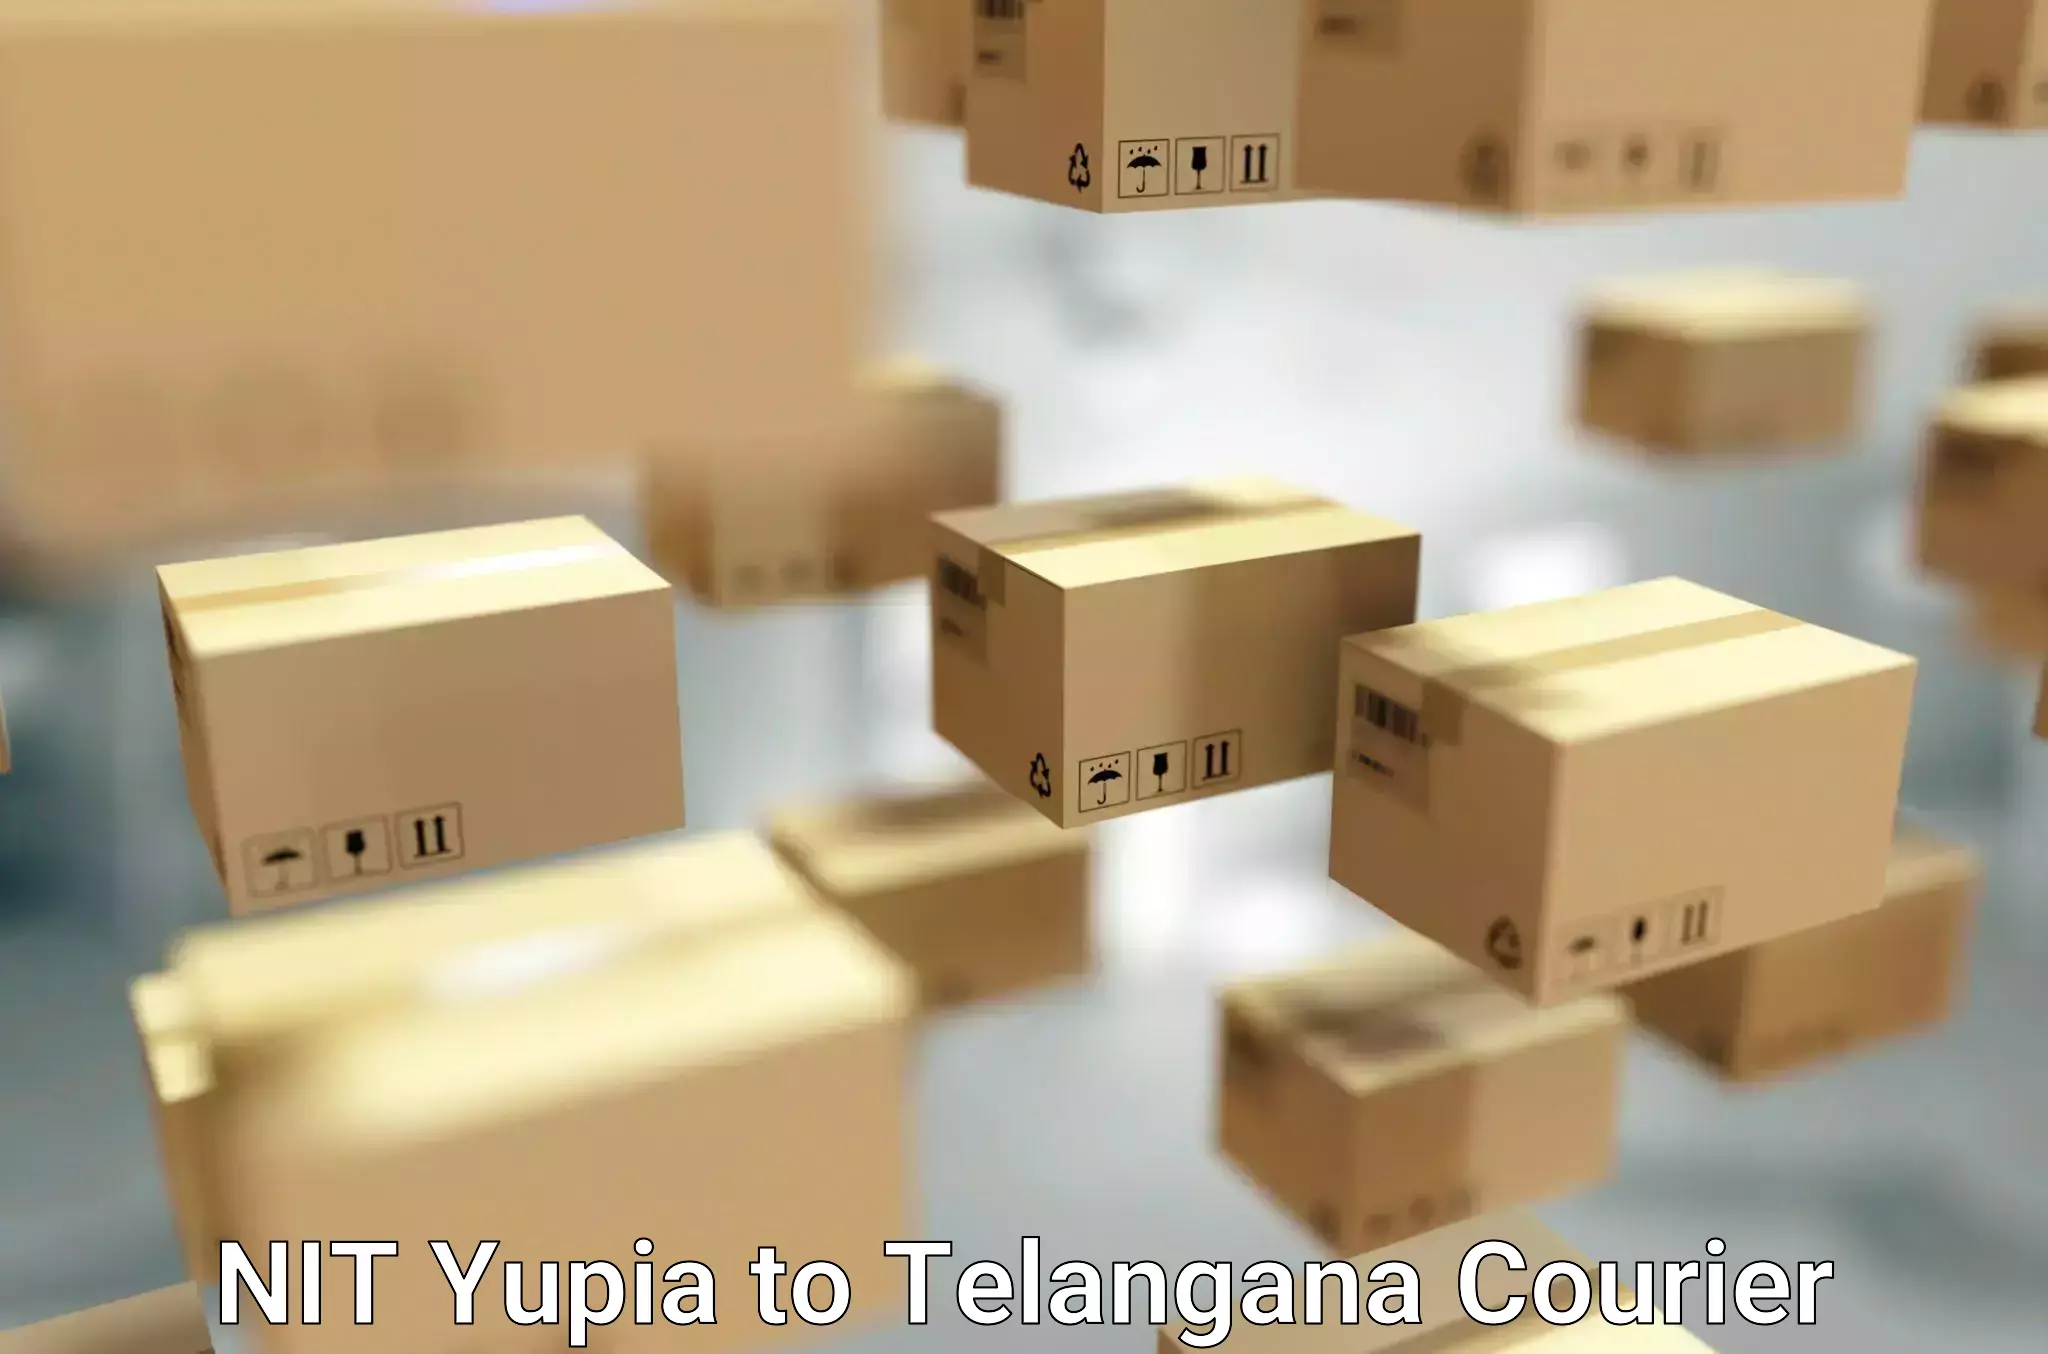 Moving and packing experts NIT Yupia to Vemulawada